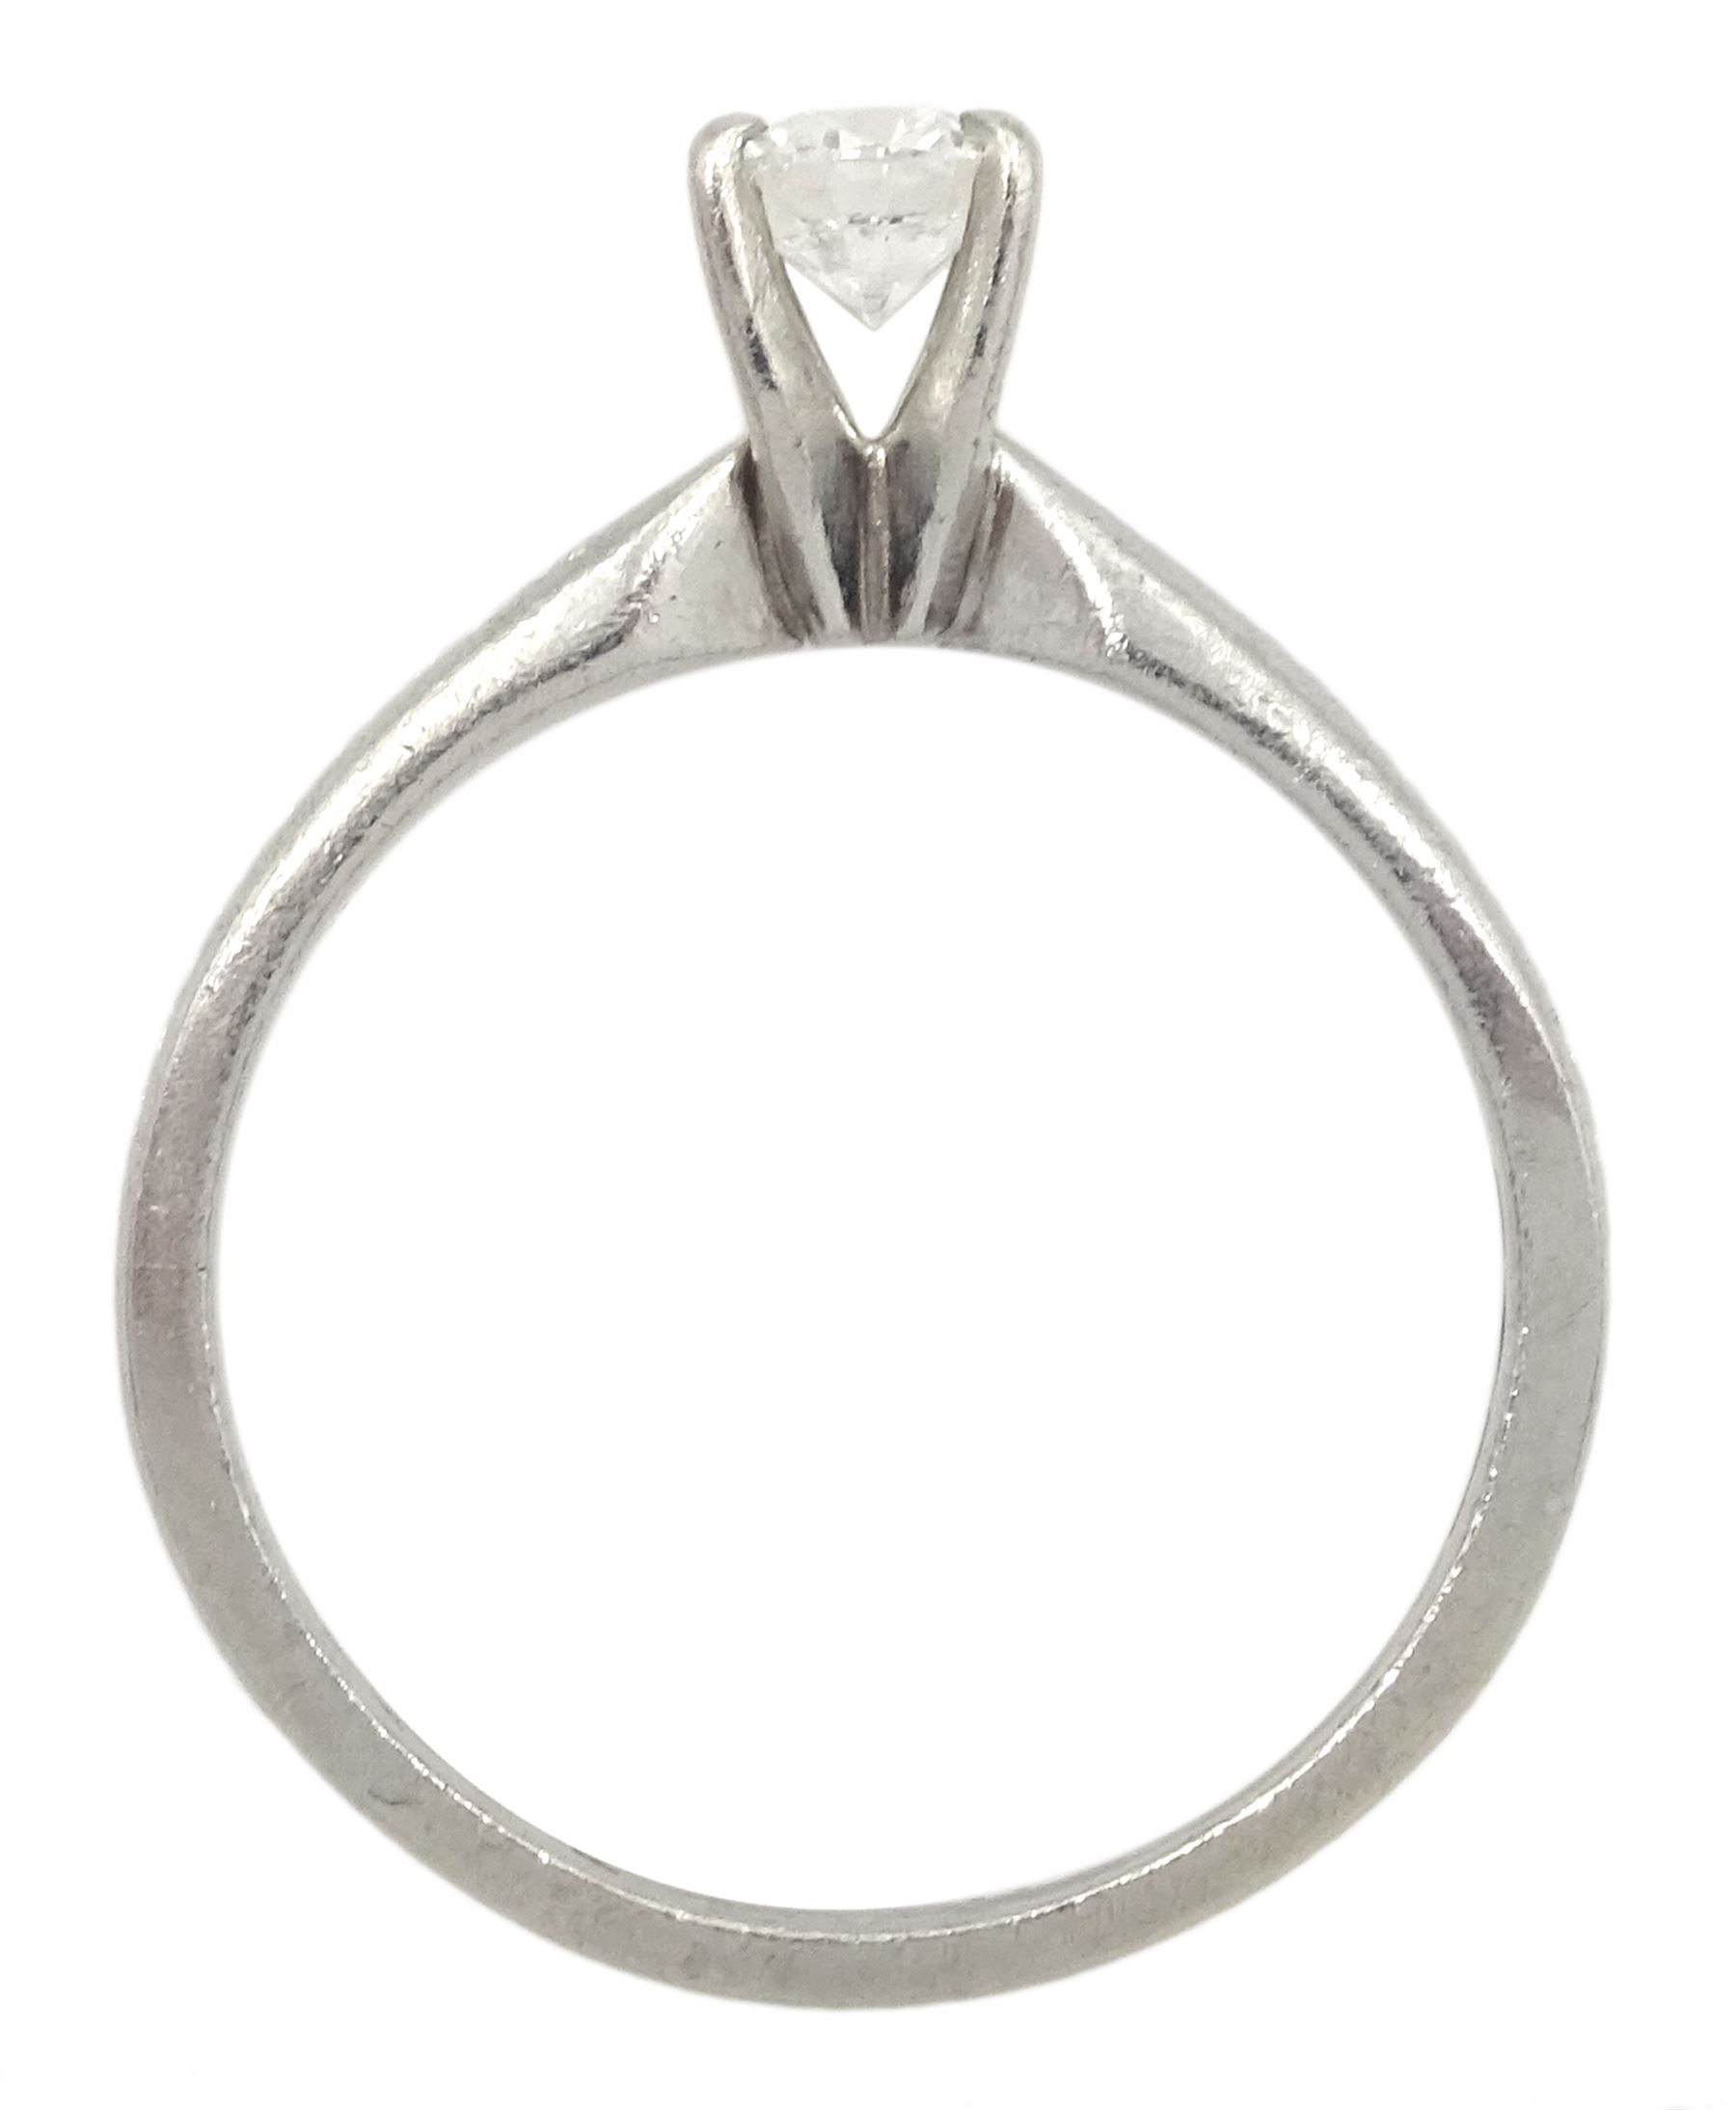 Platinum single stone round brilliant cut diamond ring - Image 4 of 4